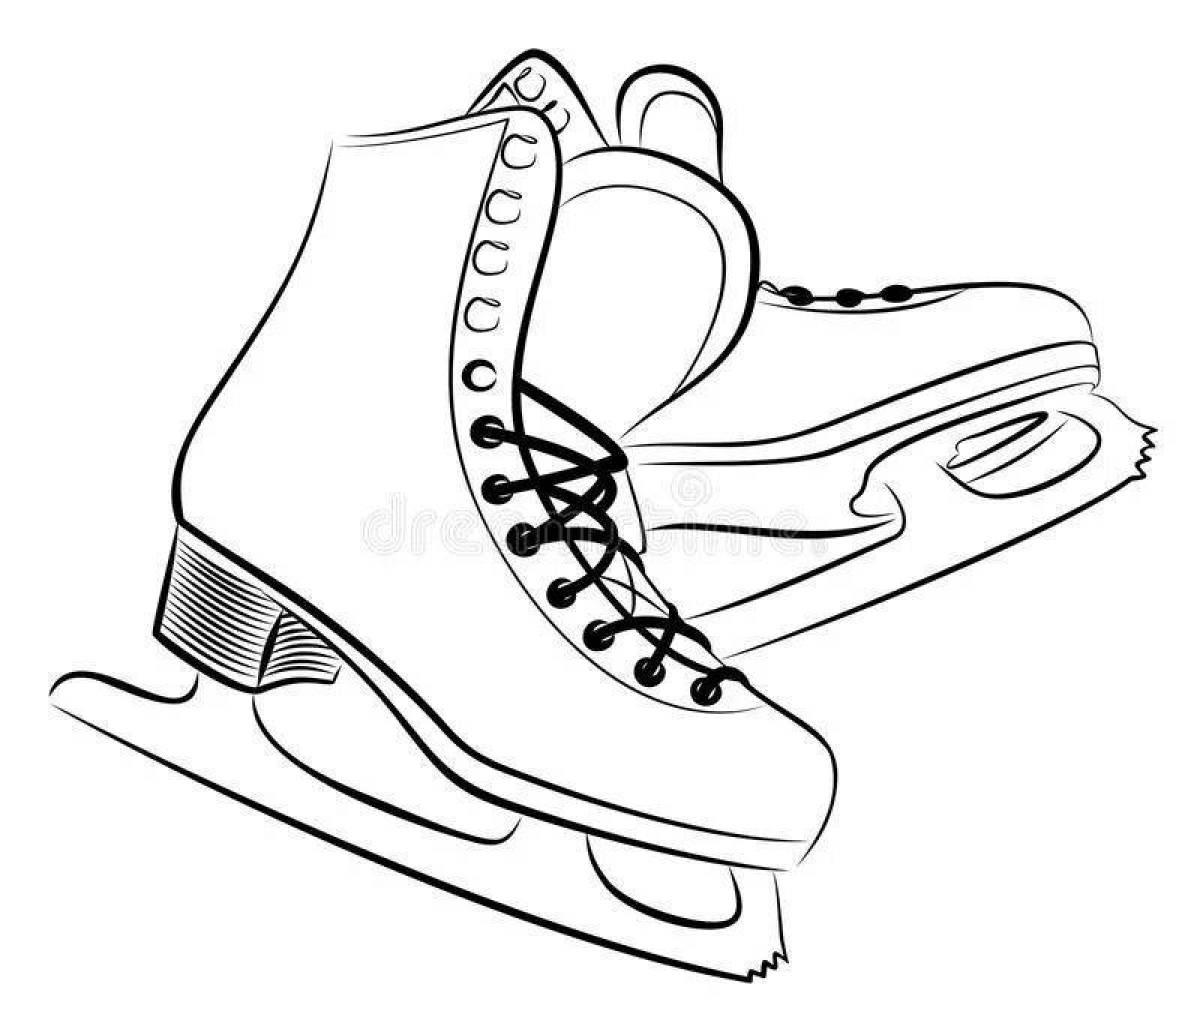 Coloring nice figure skates